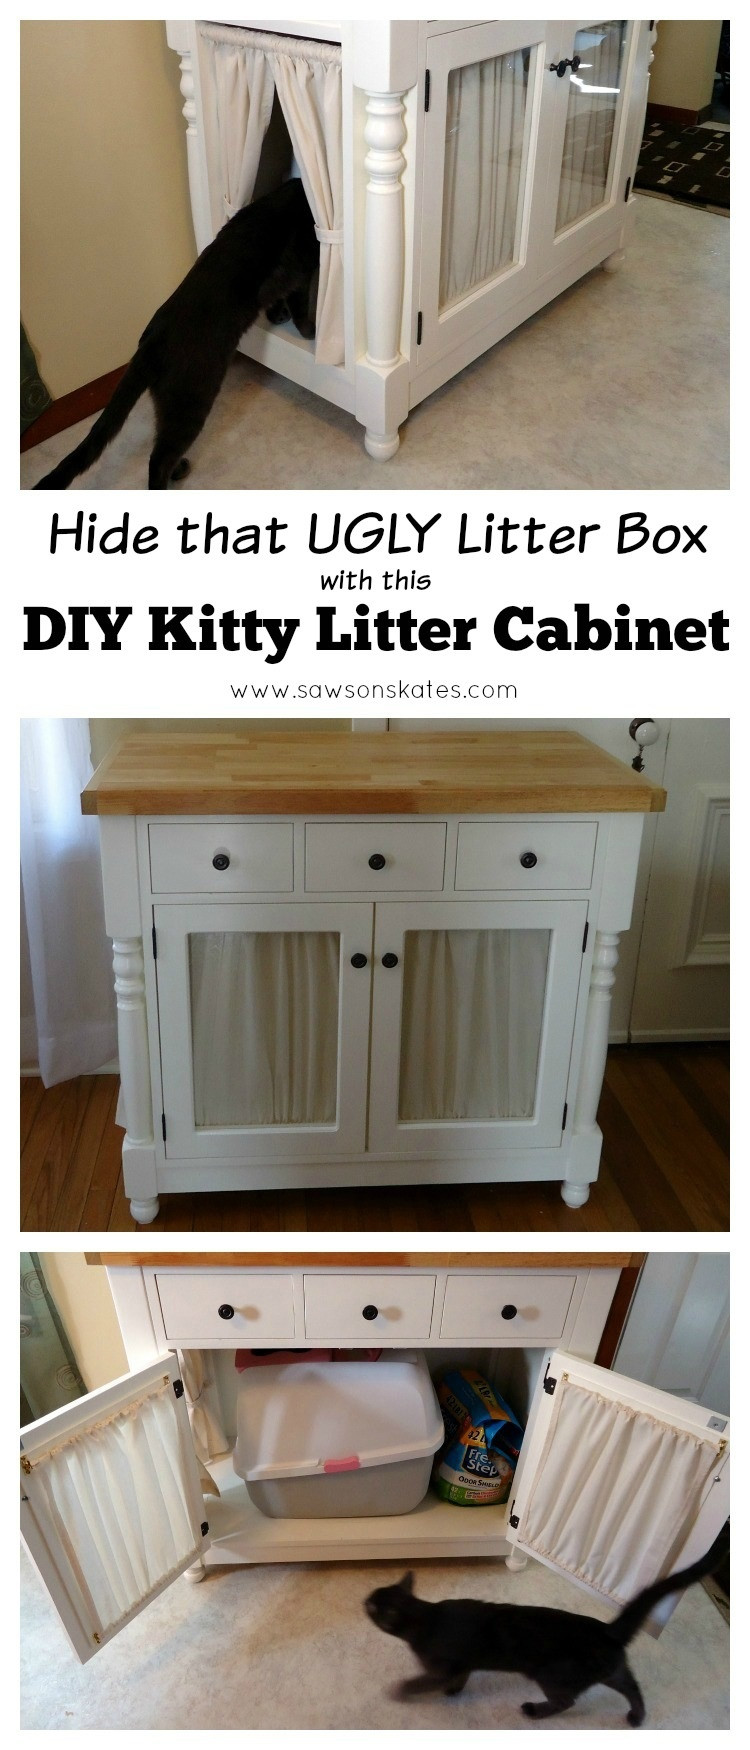 DIY Kitty Litter
 DIY Kitty Litter Cabinet Hides UGLY Litter Box